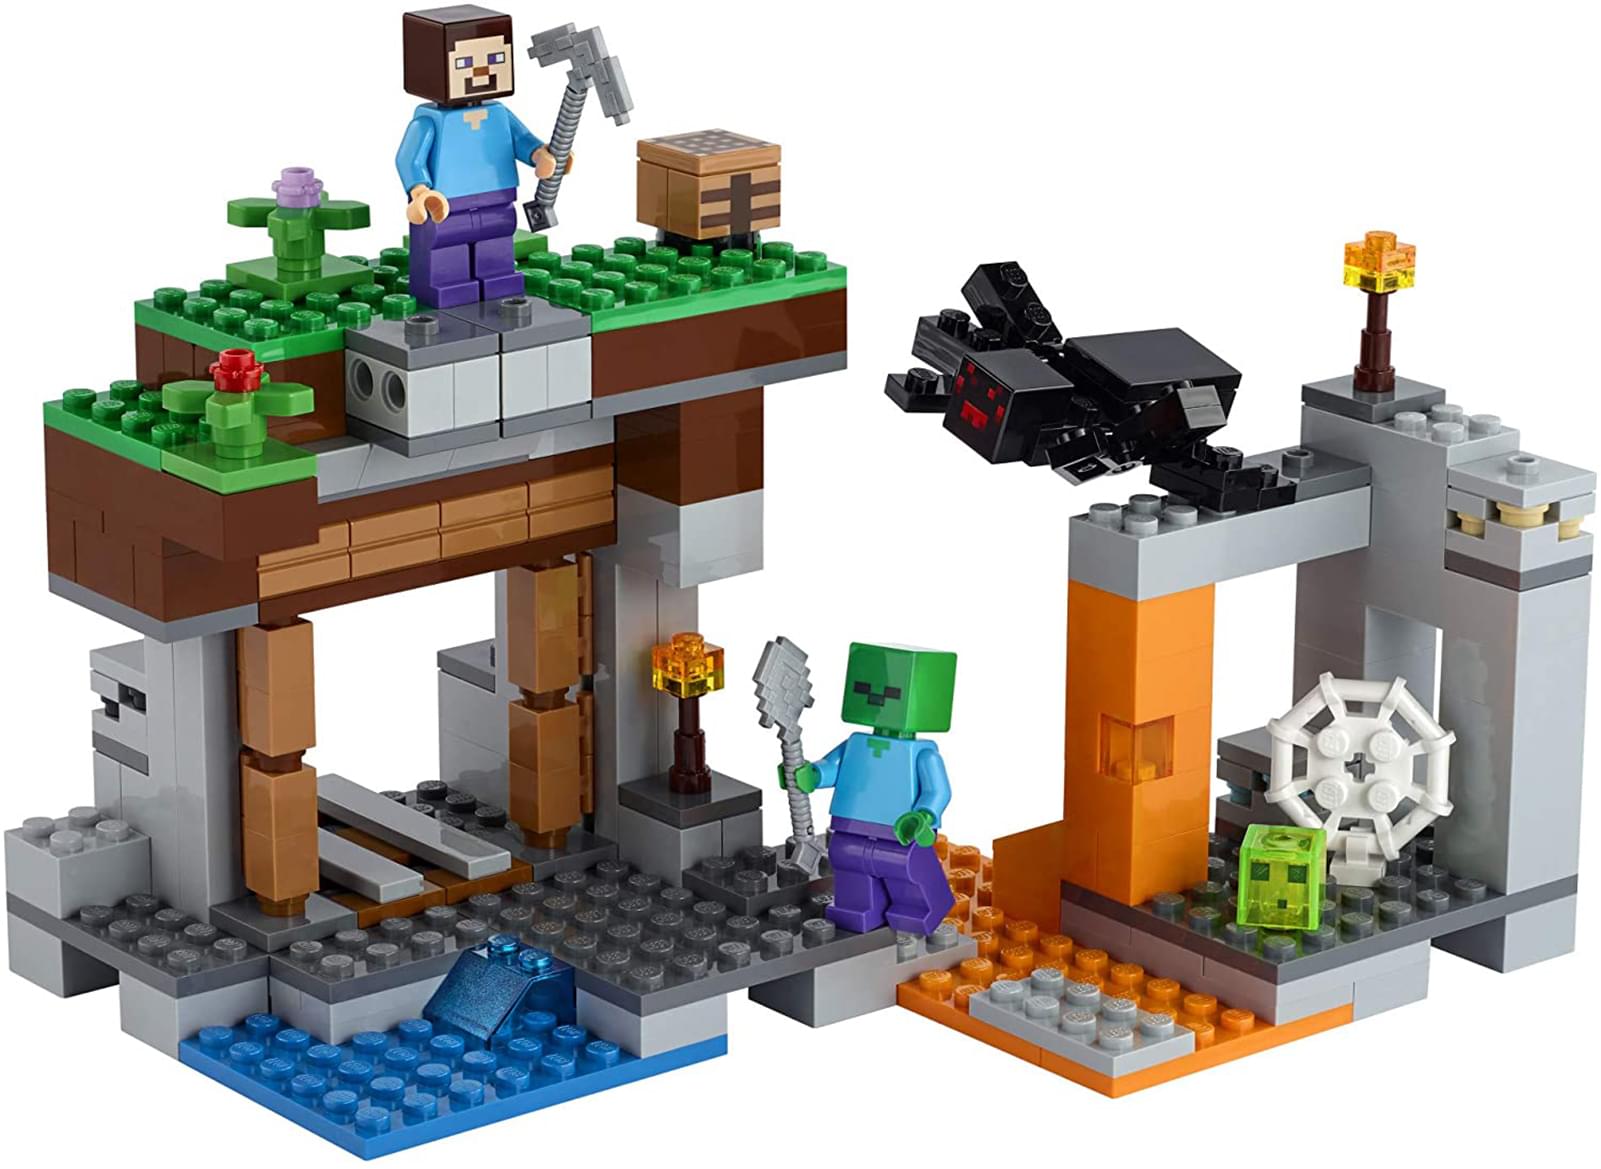 LEGO Minecraft 21166 The Abandoned Mine 248 Piece Building Kit